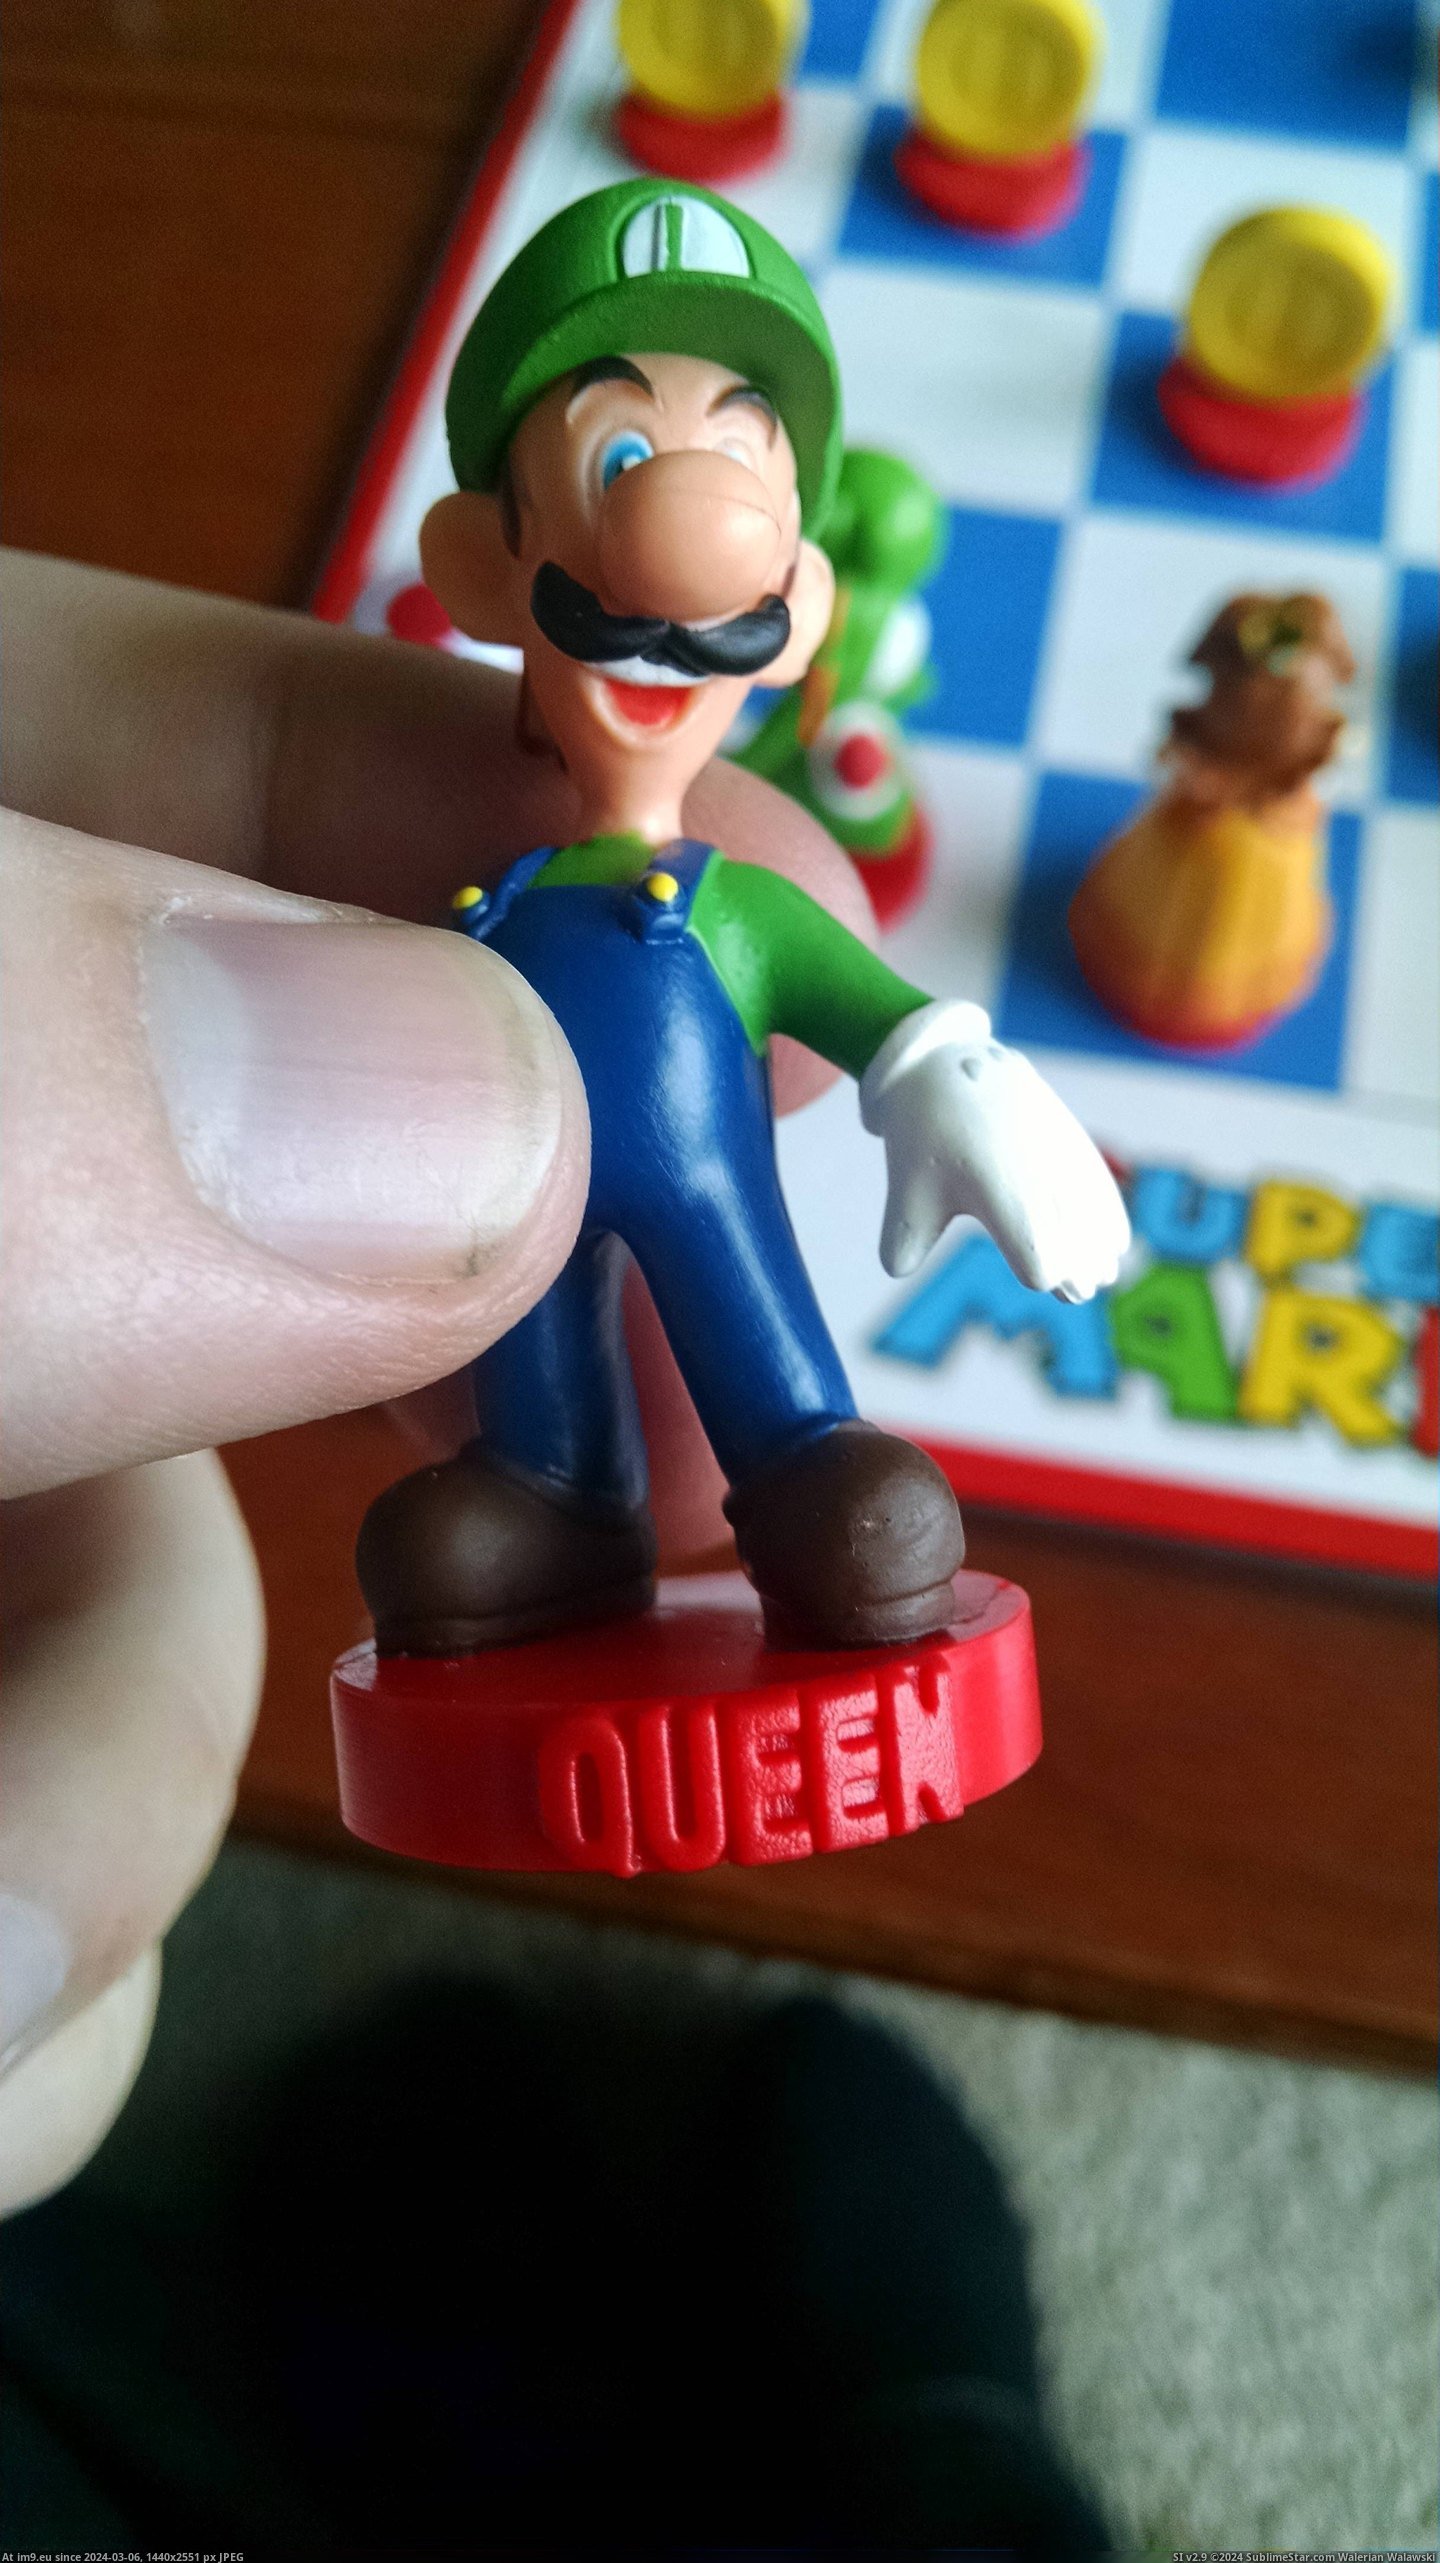 #Gaming #Sex #Poor #Chess #Luigi #Super #Mario [Gaming] Super Mario chess set. Poor Luigi... Pic. (Image of album My r/GAMING favs))